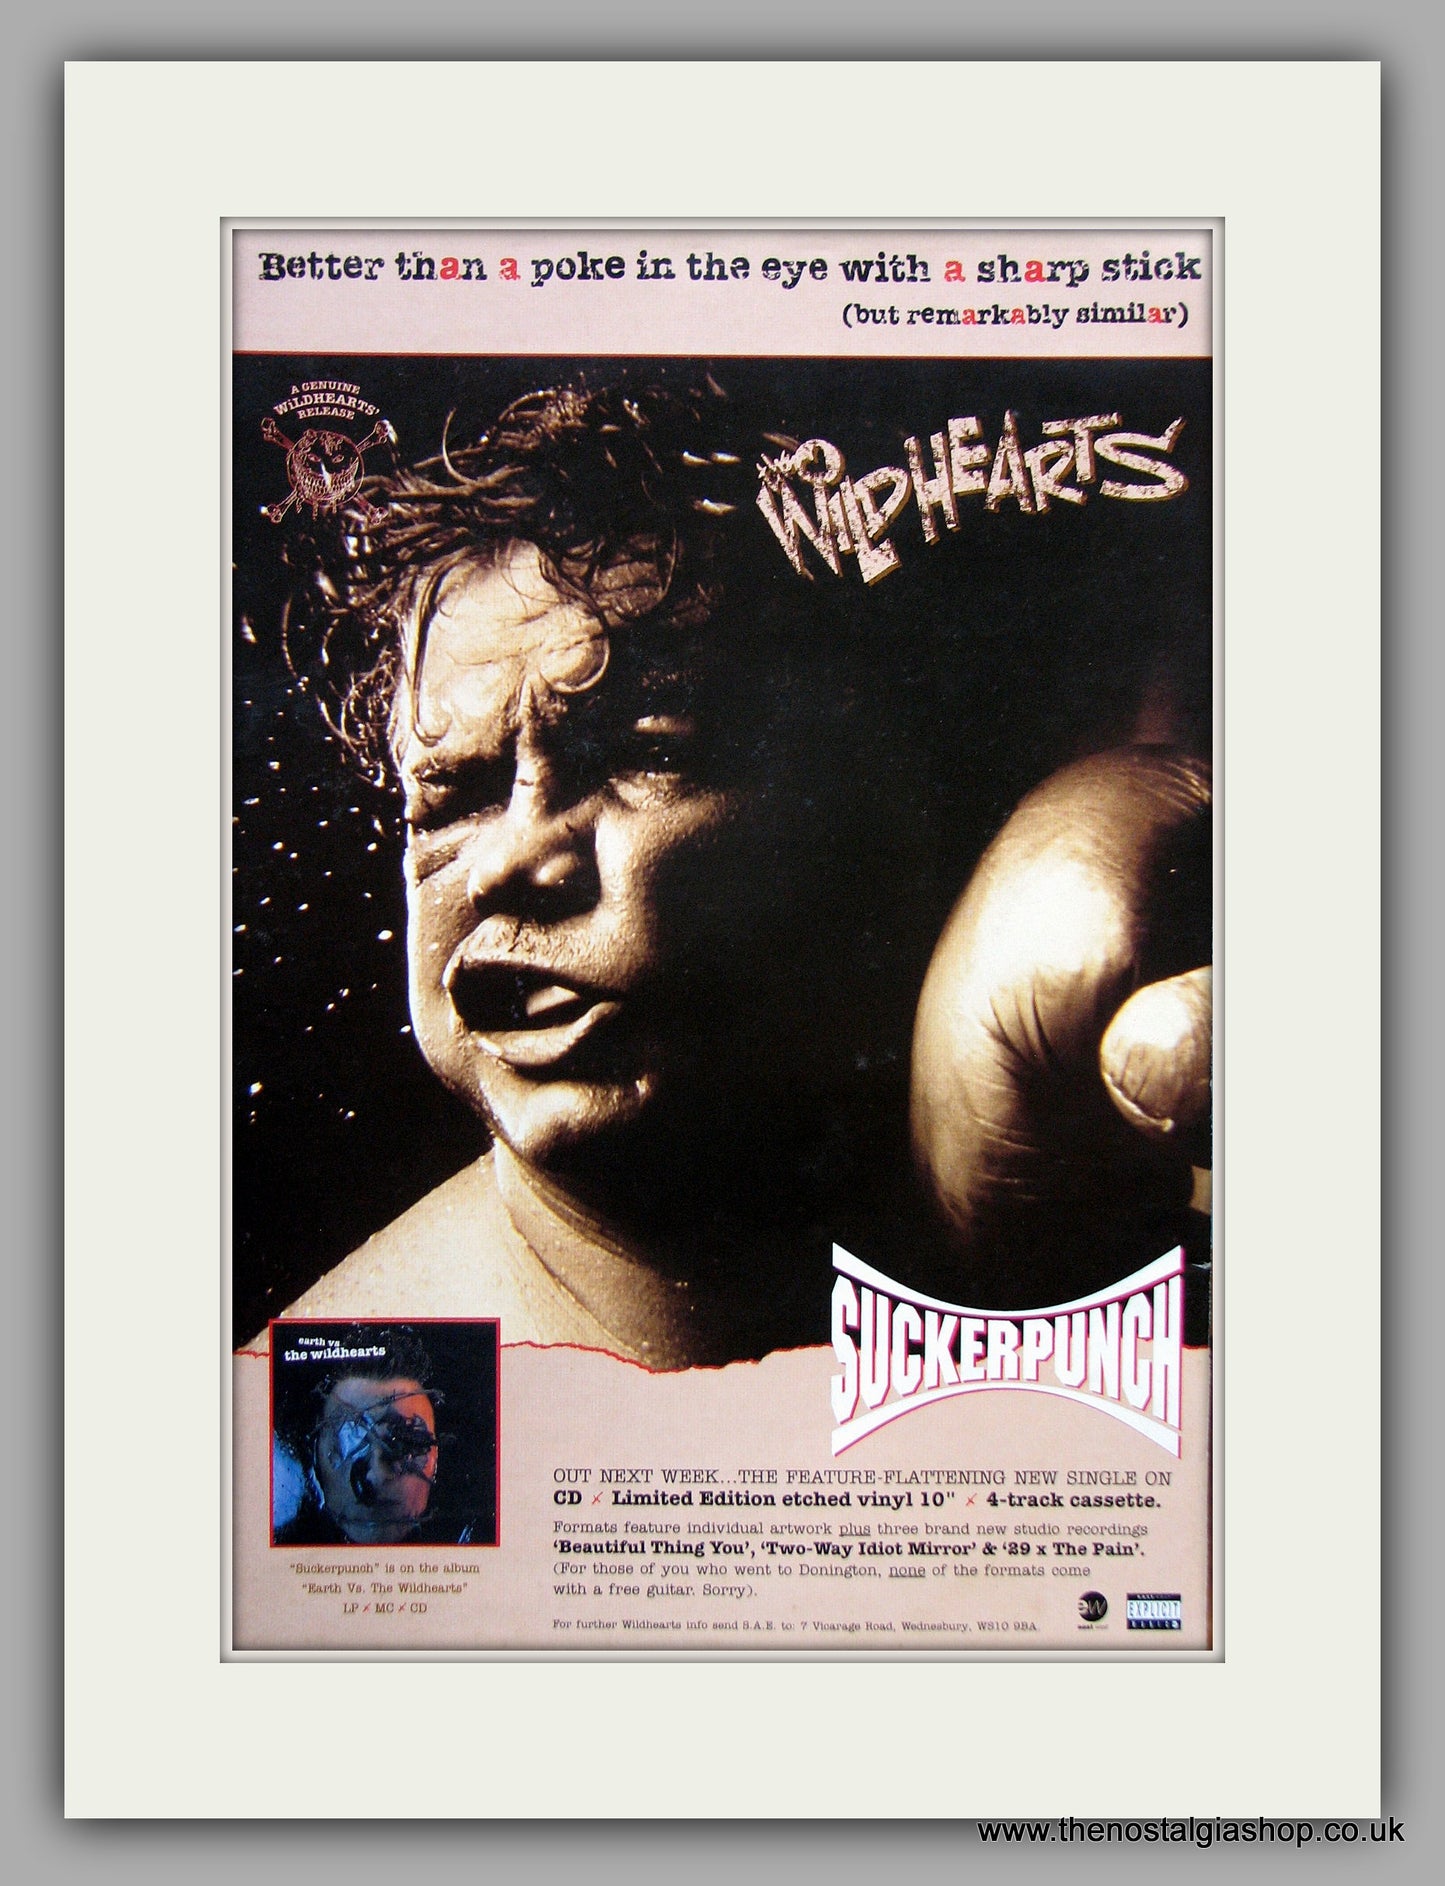 Wildhearts (The) Suckerpunch. 1994 Original Advert (ref AD7948)